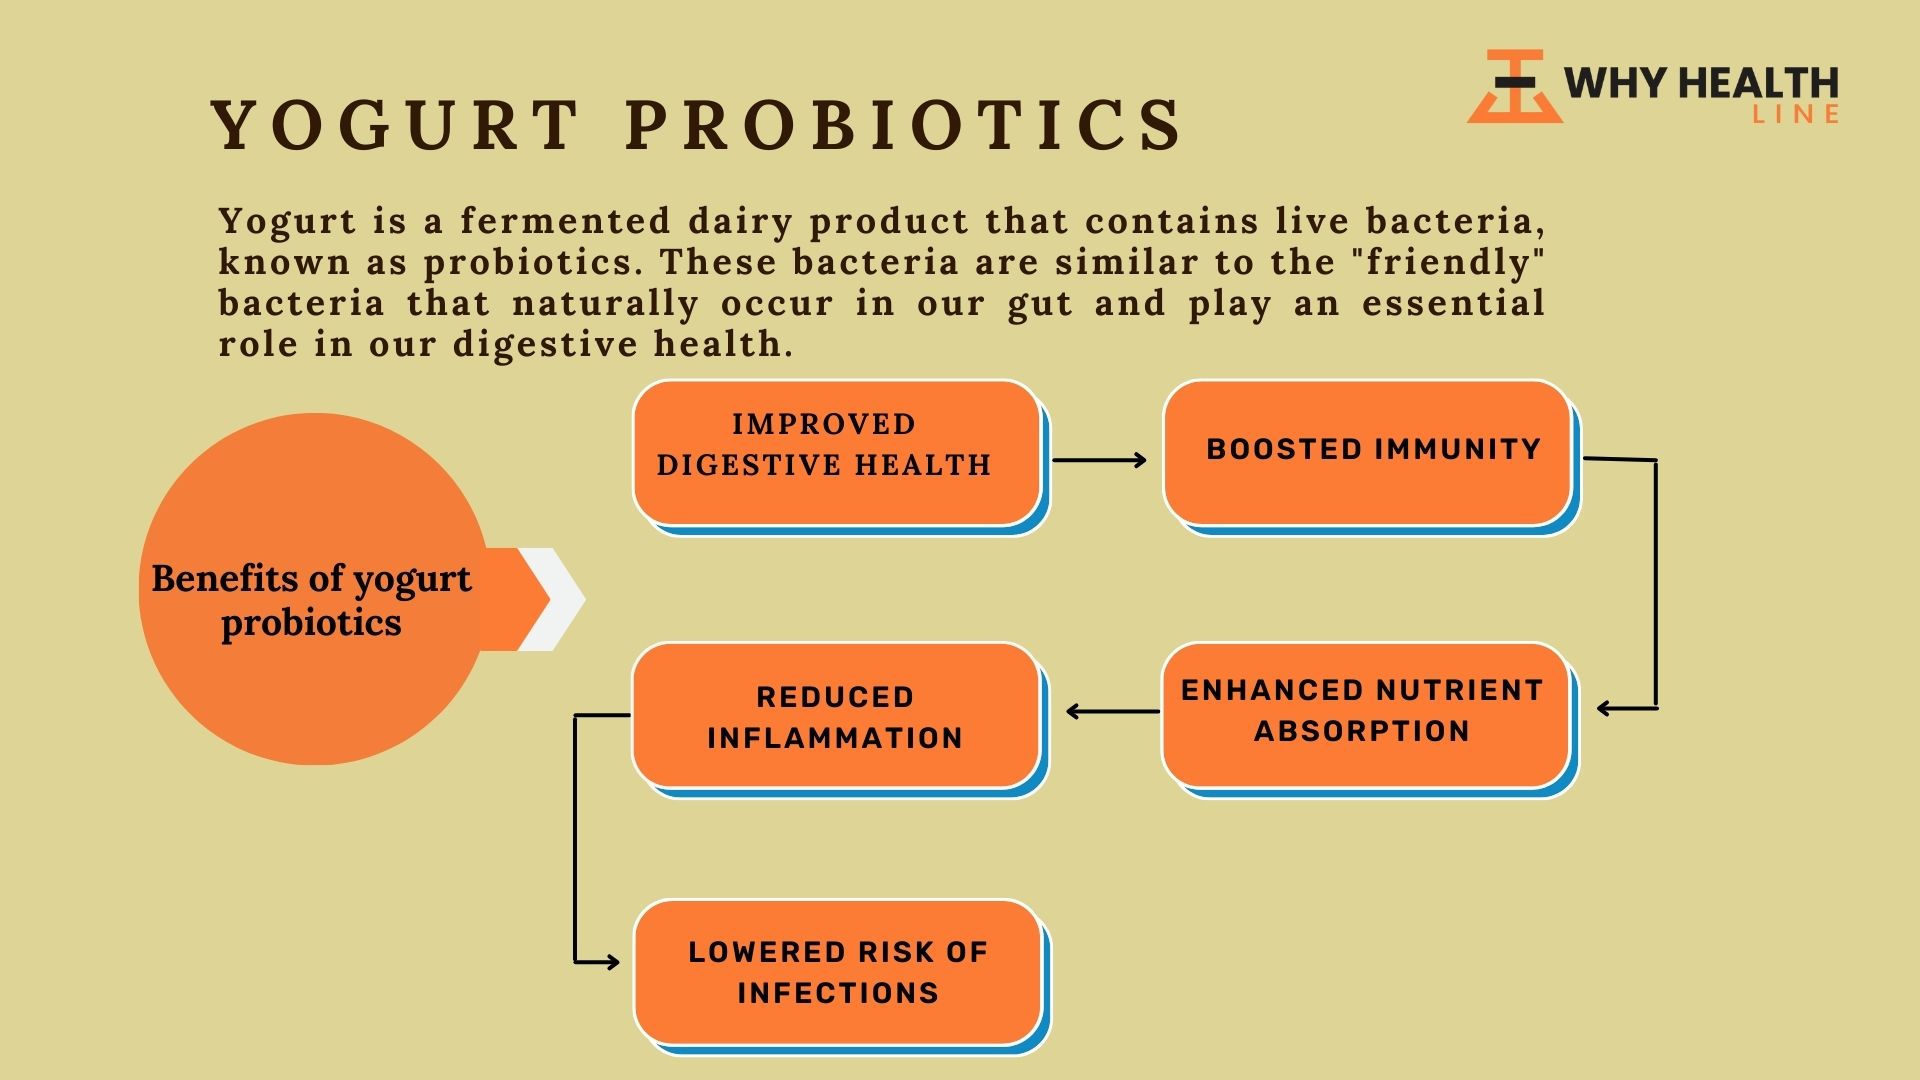 Yogurt Probiotics and its benefits